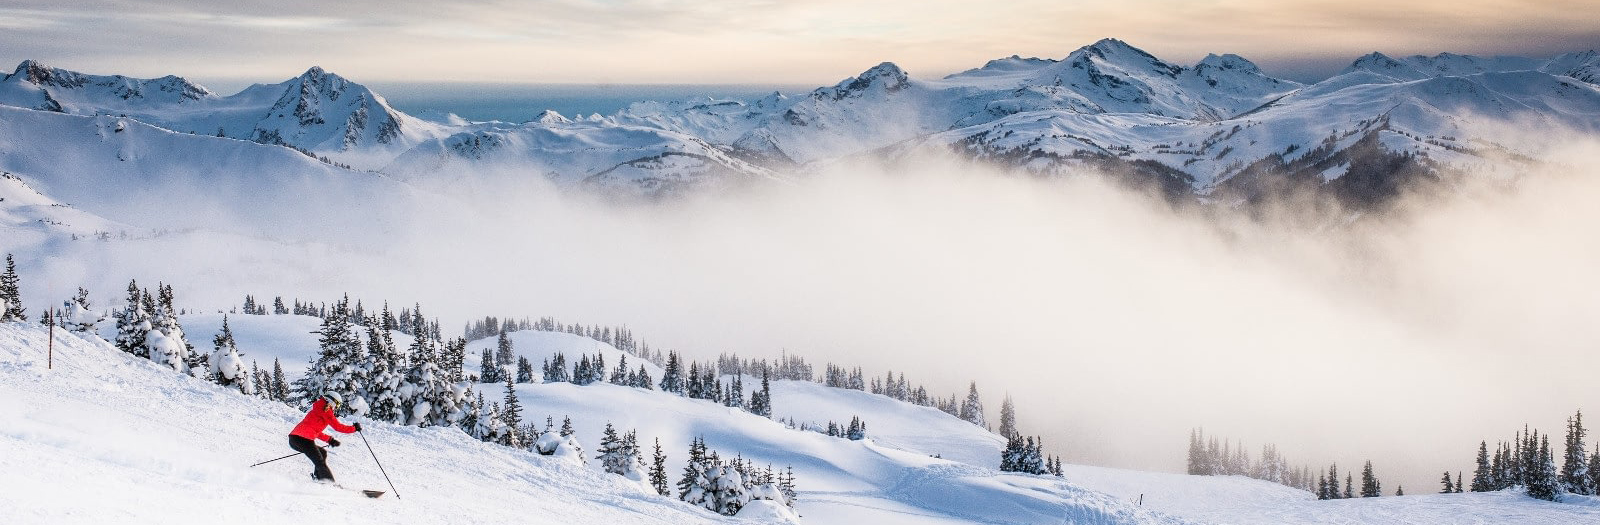 austria ski resorts, austria ski vacations, austria ski vacation packages